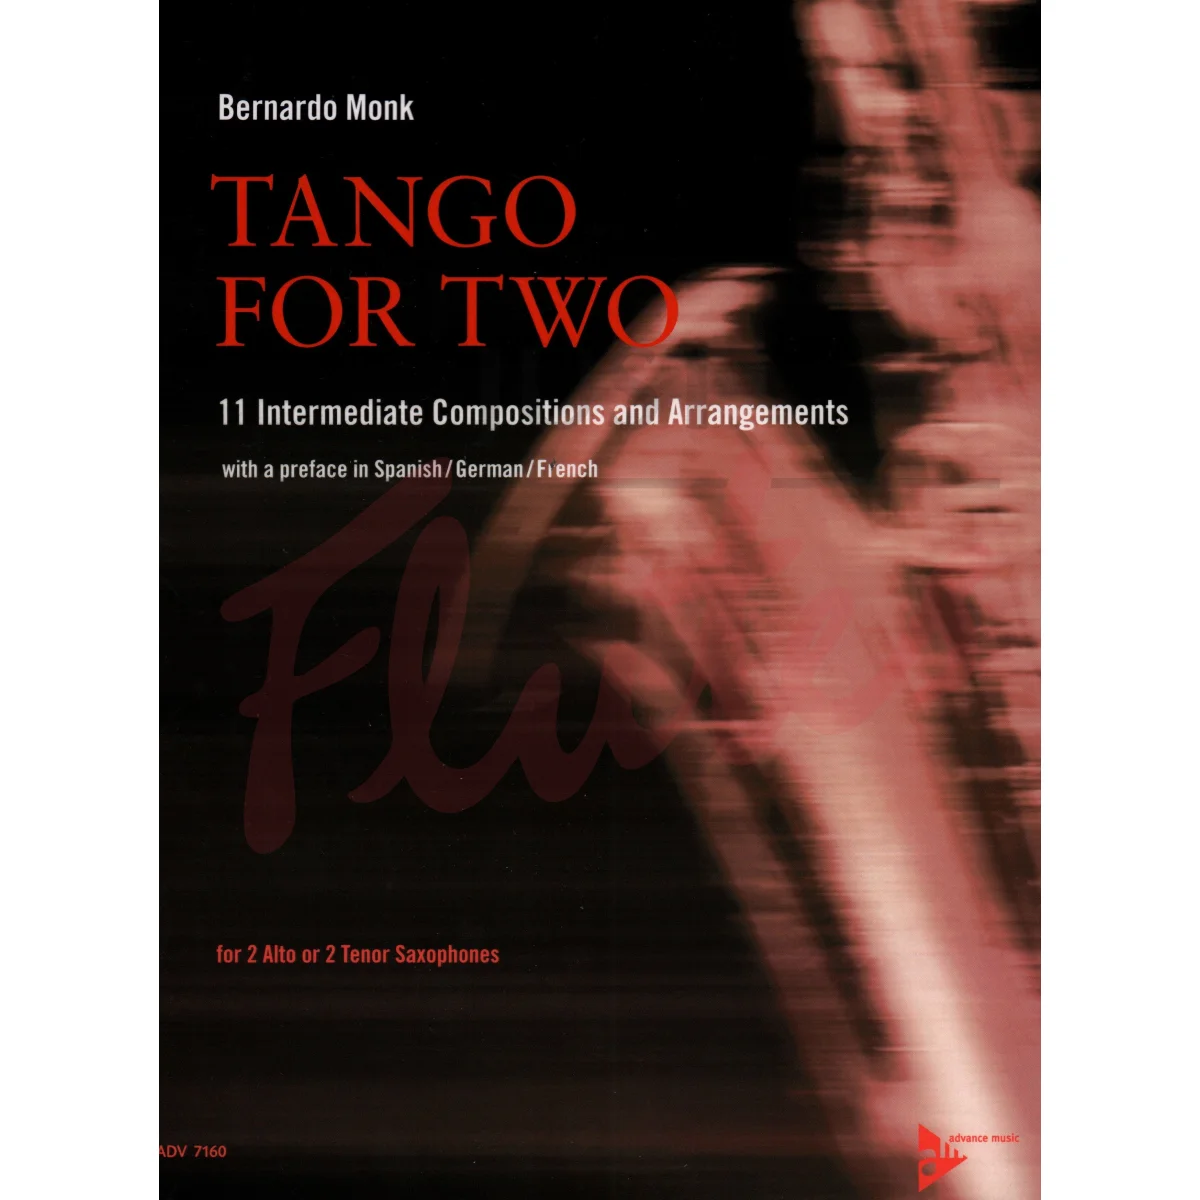 Tango for Two for 2 Alto or 2 Tenor Saxophones